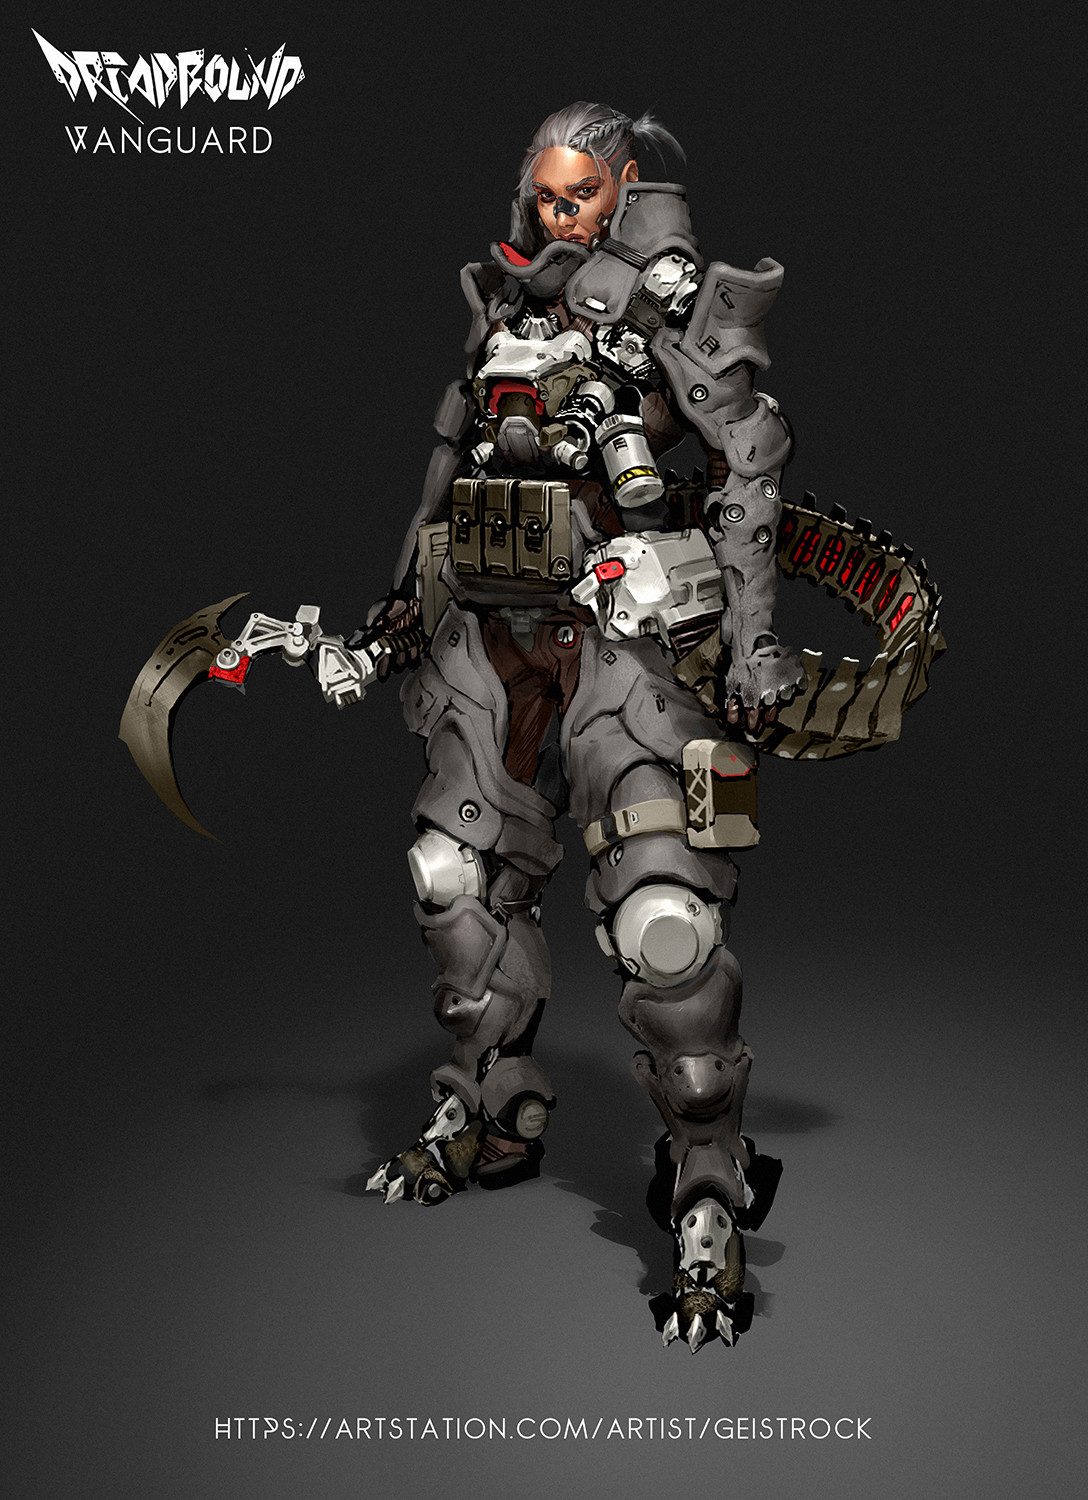 Conceptual render for Vanguard character